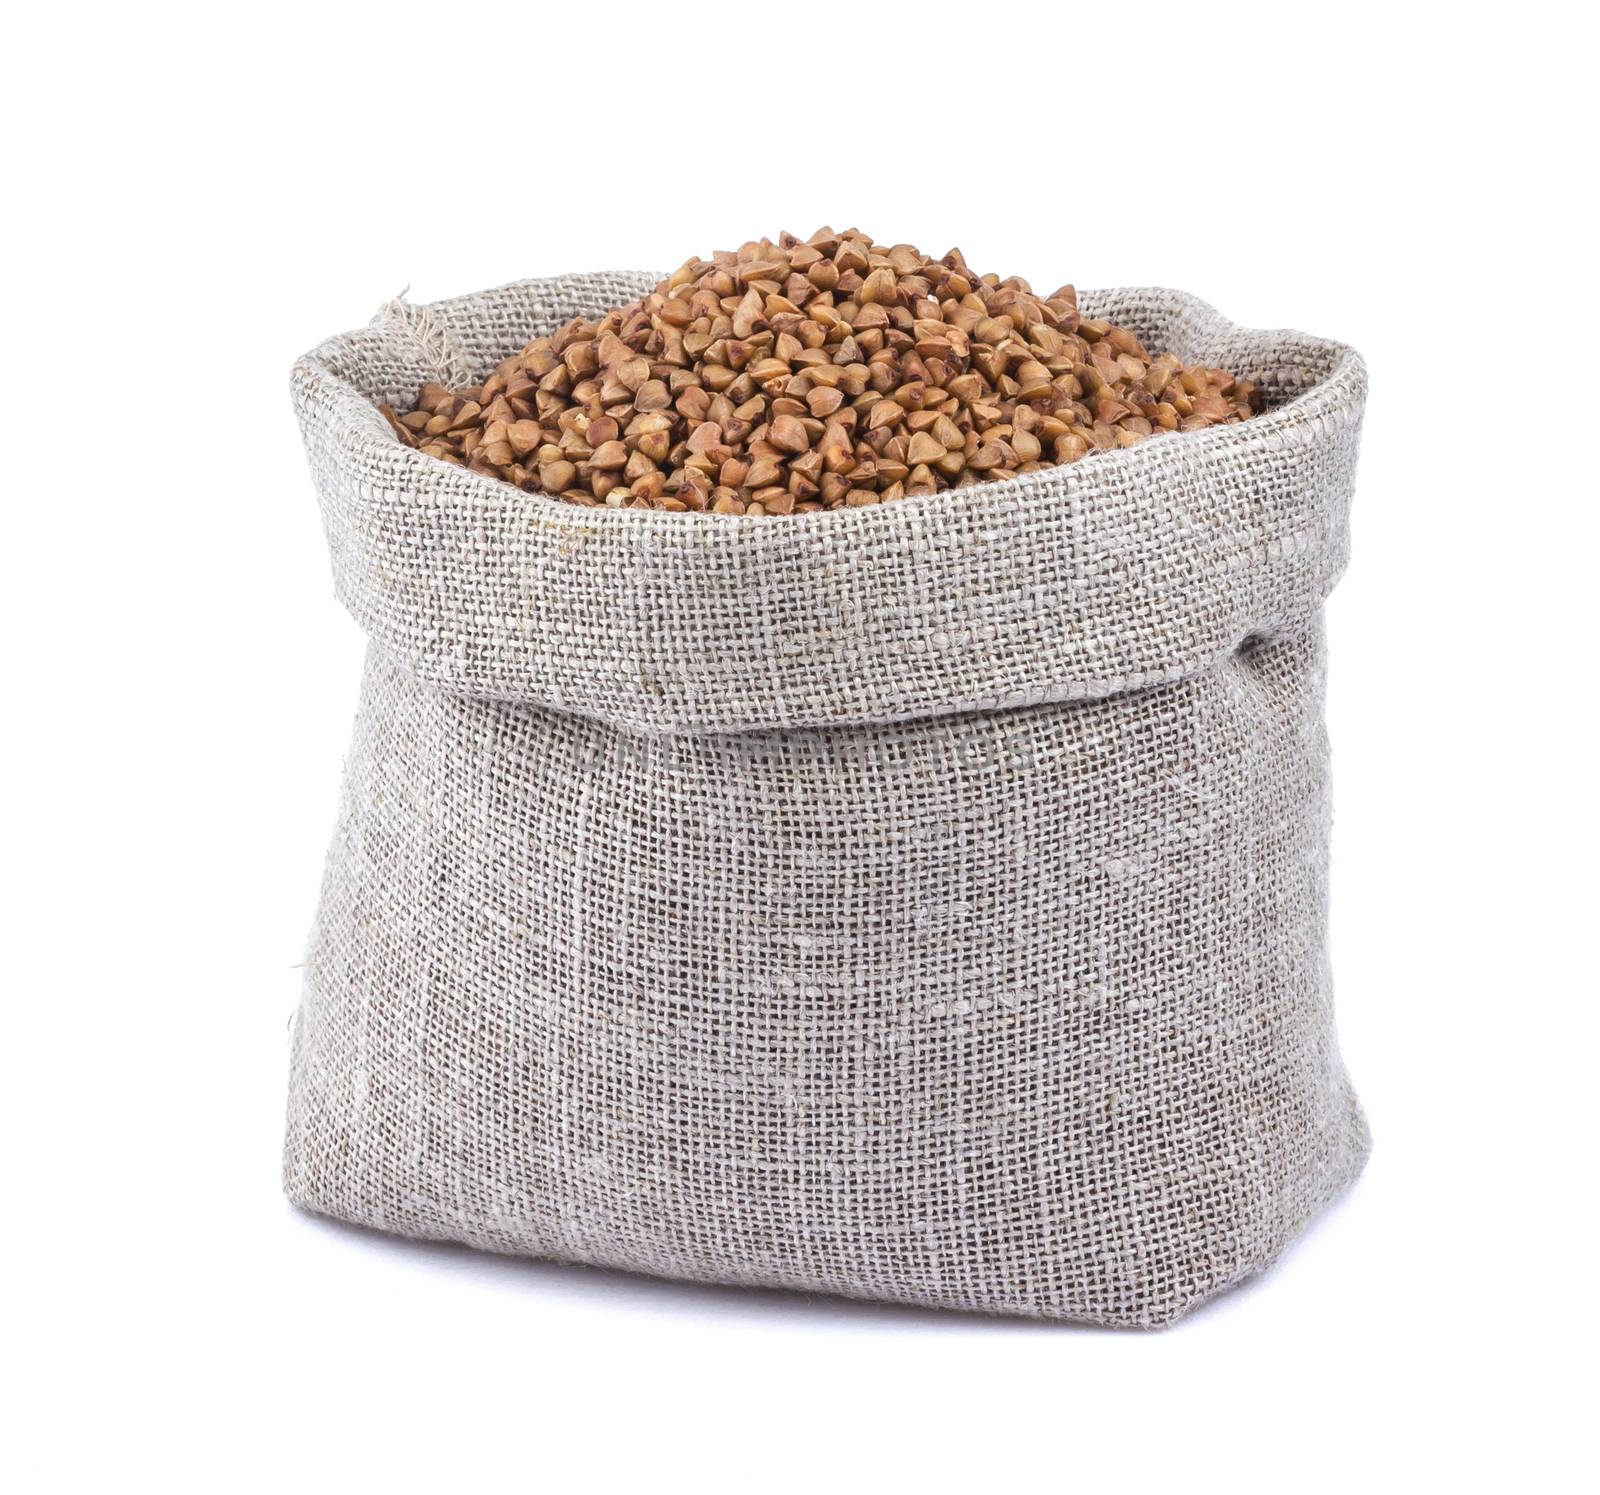 Buckwheat in bag isolated on white background by xamtiw